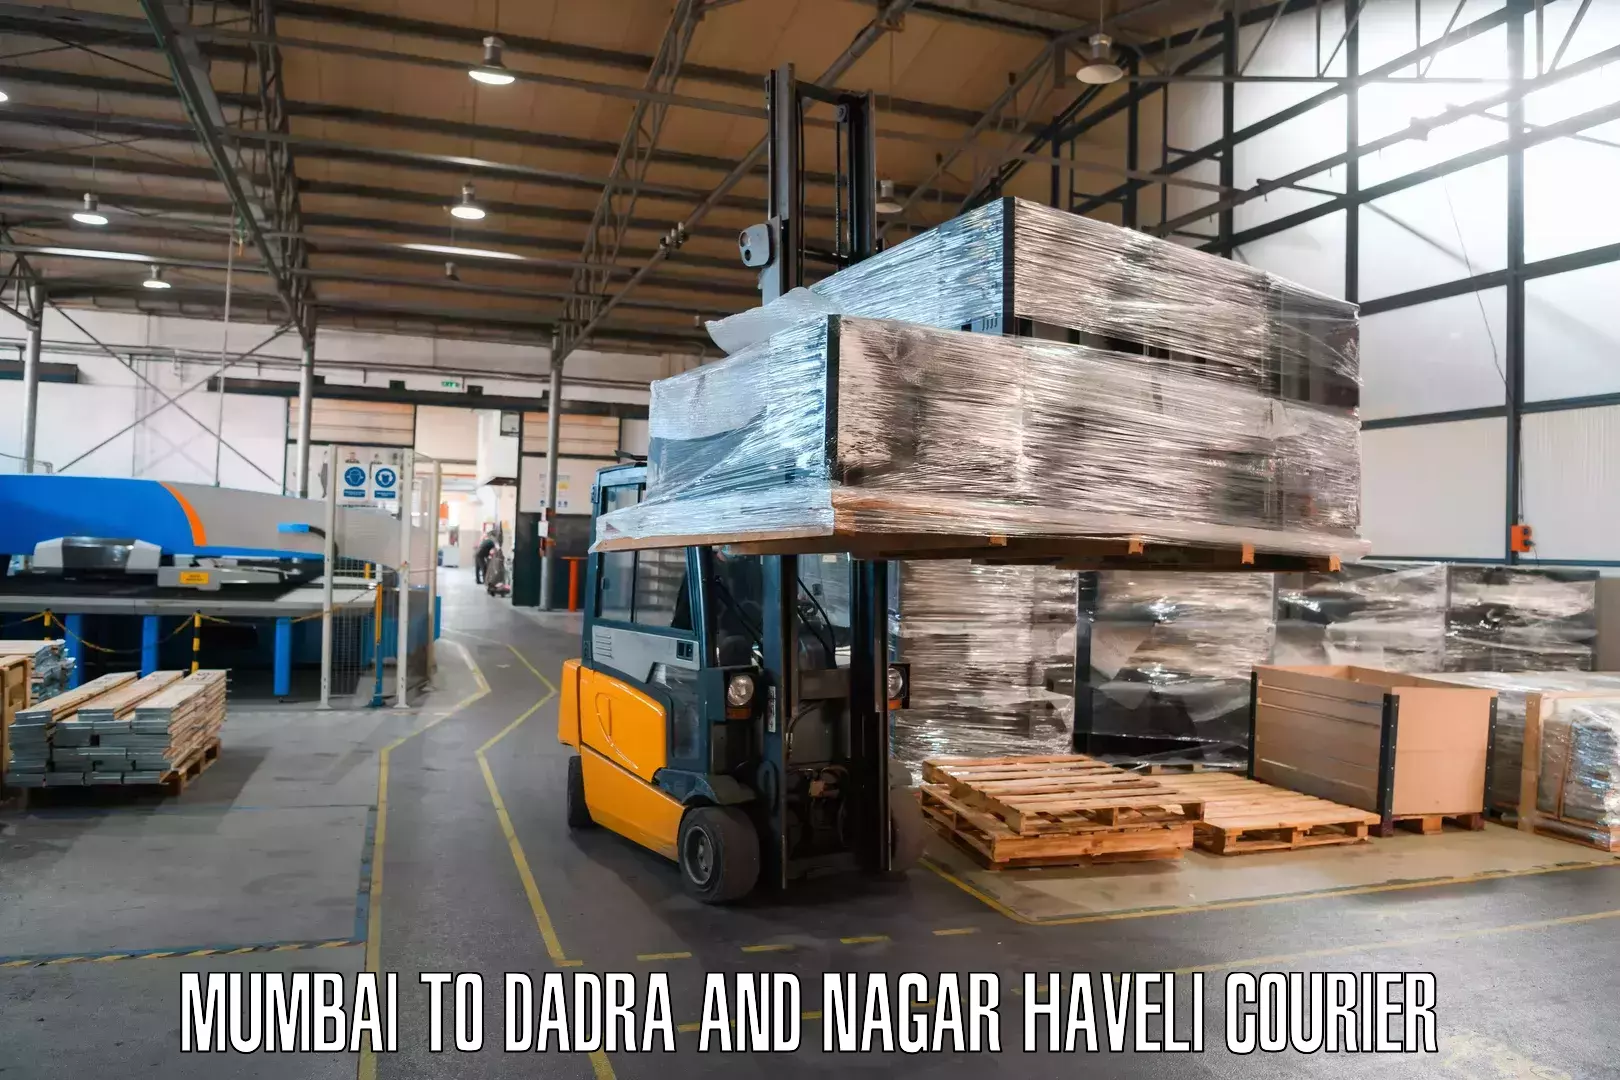 Courier tracking online Mumbai to Dadra and Nagar Haveli